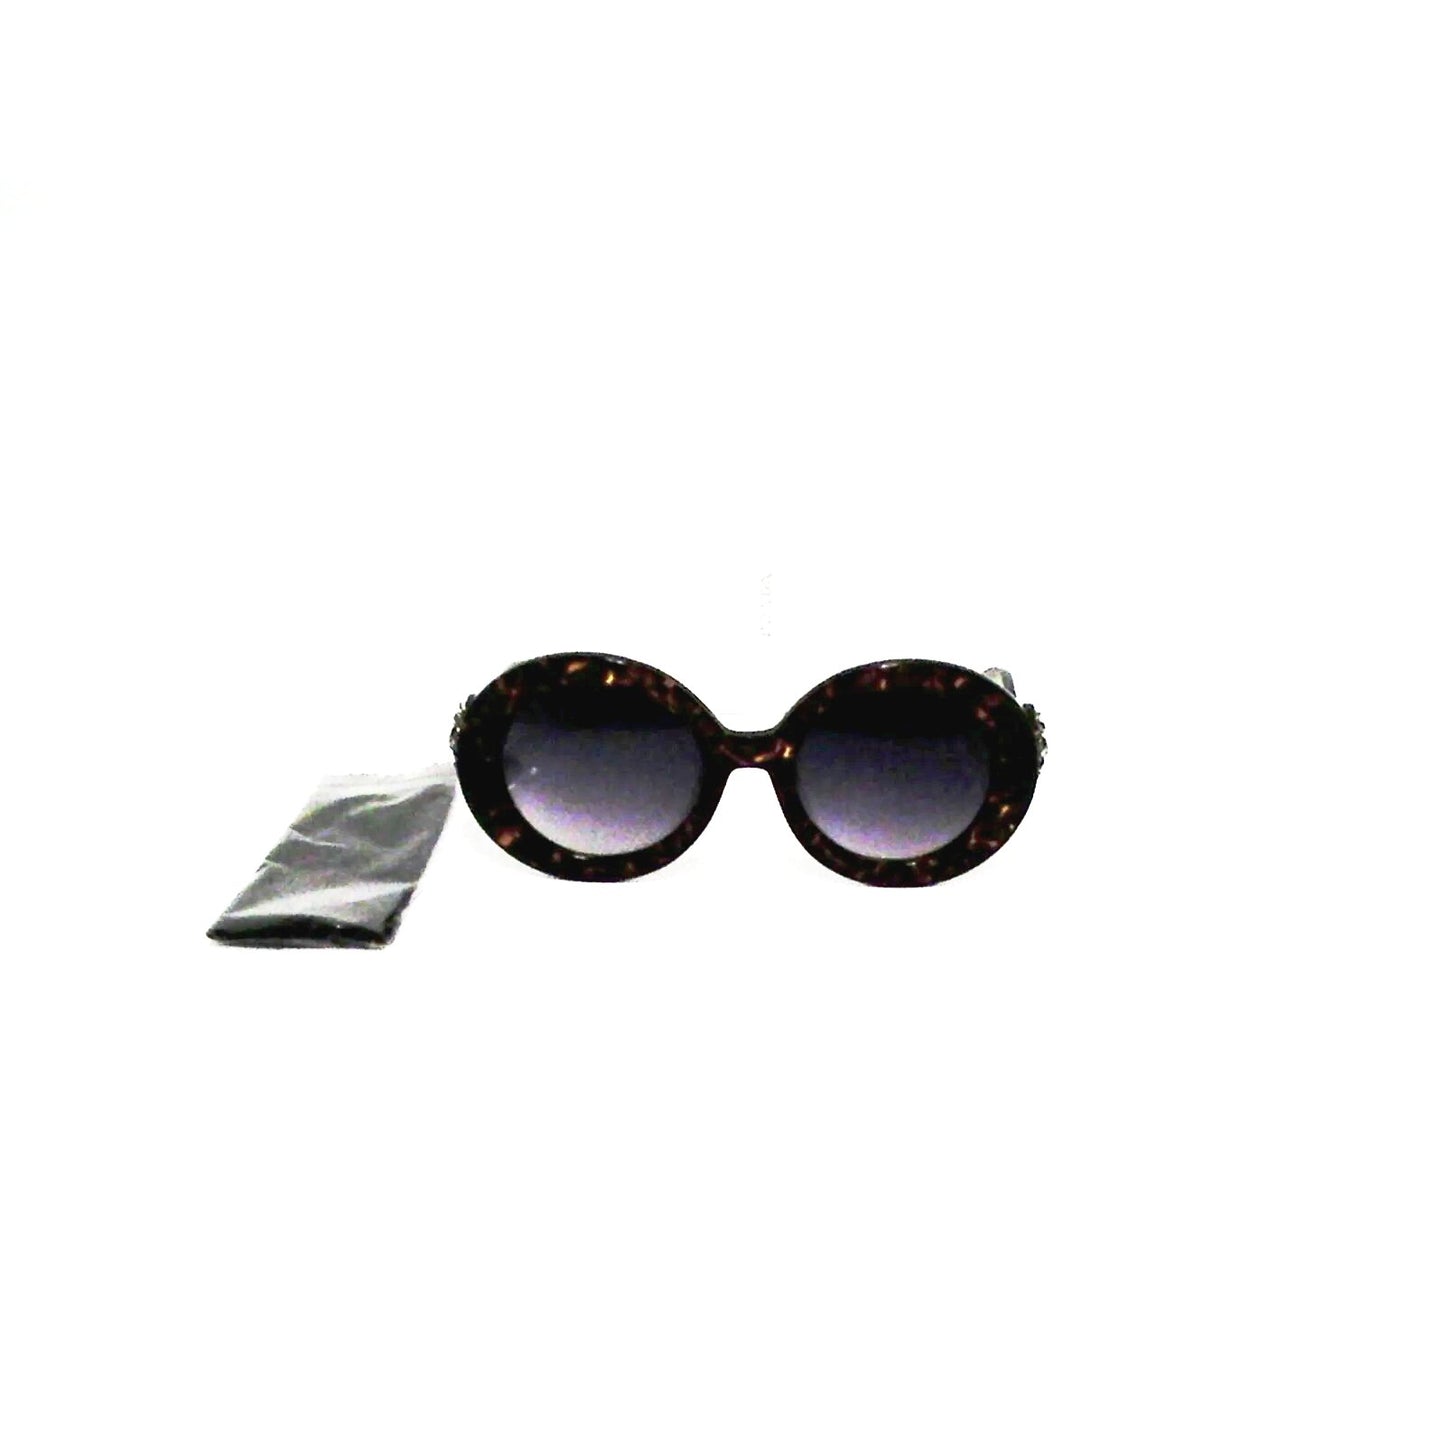 PRADA New Sunglasses womens round tortoise black arm spr 27QS Swarovski Crystal